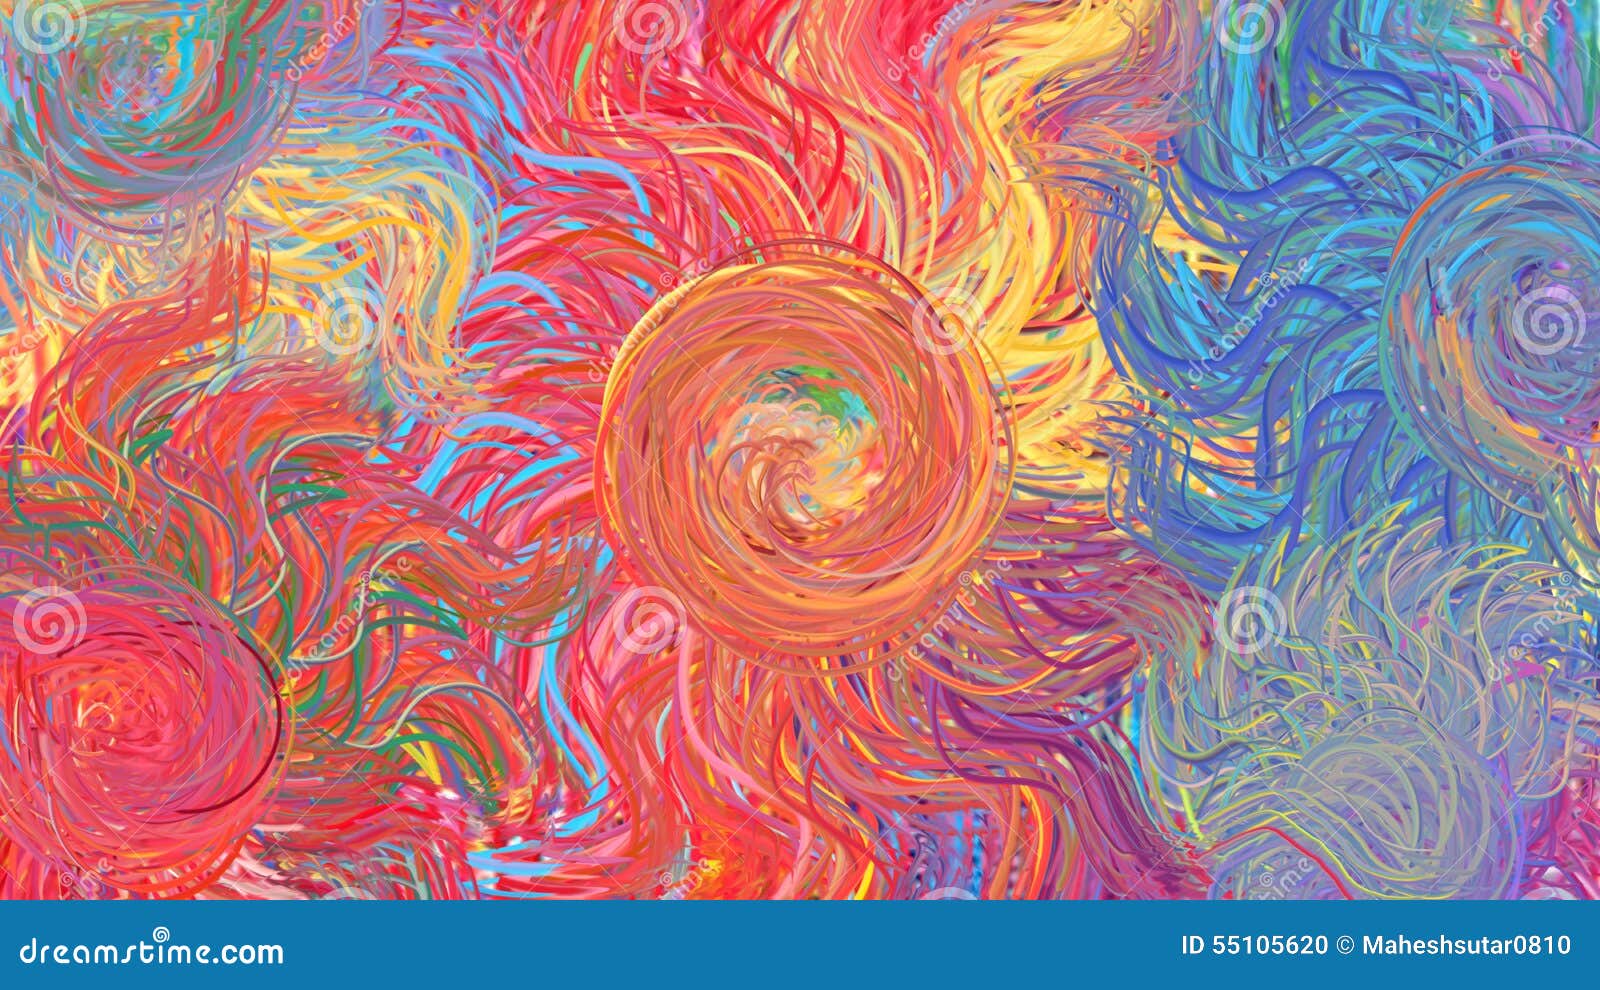 abstract modern art rainbow circles swirl colorful pattern